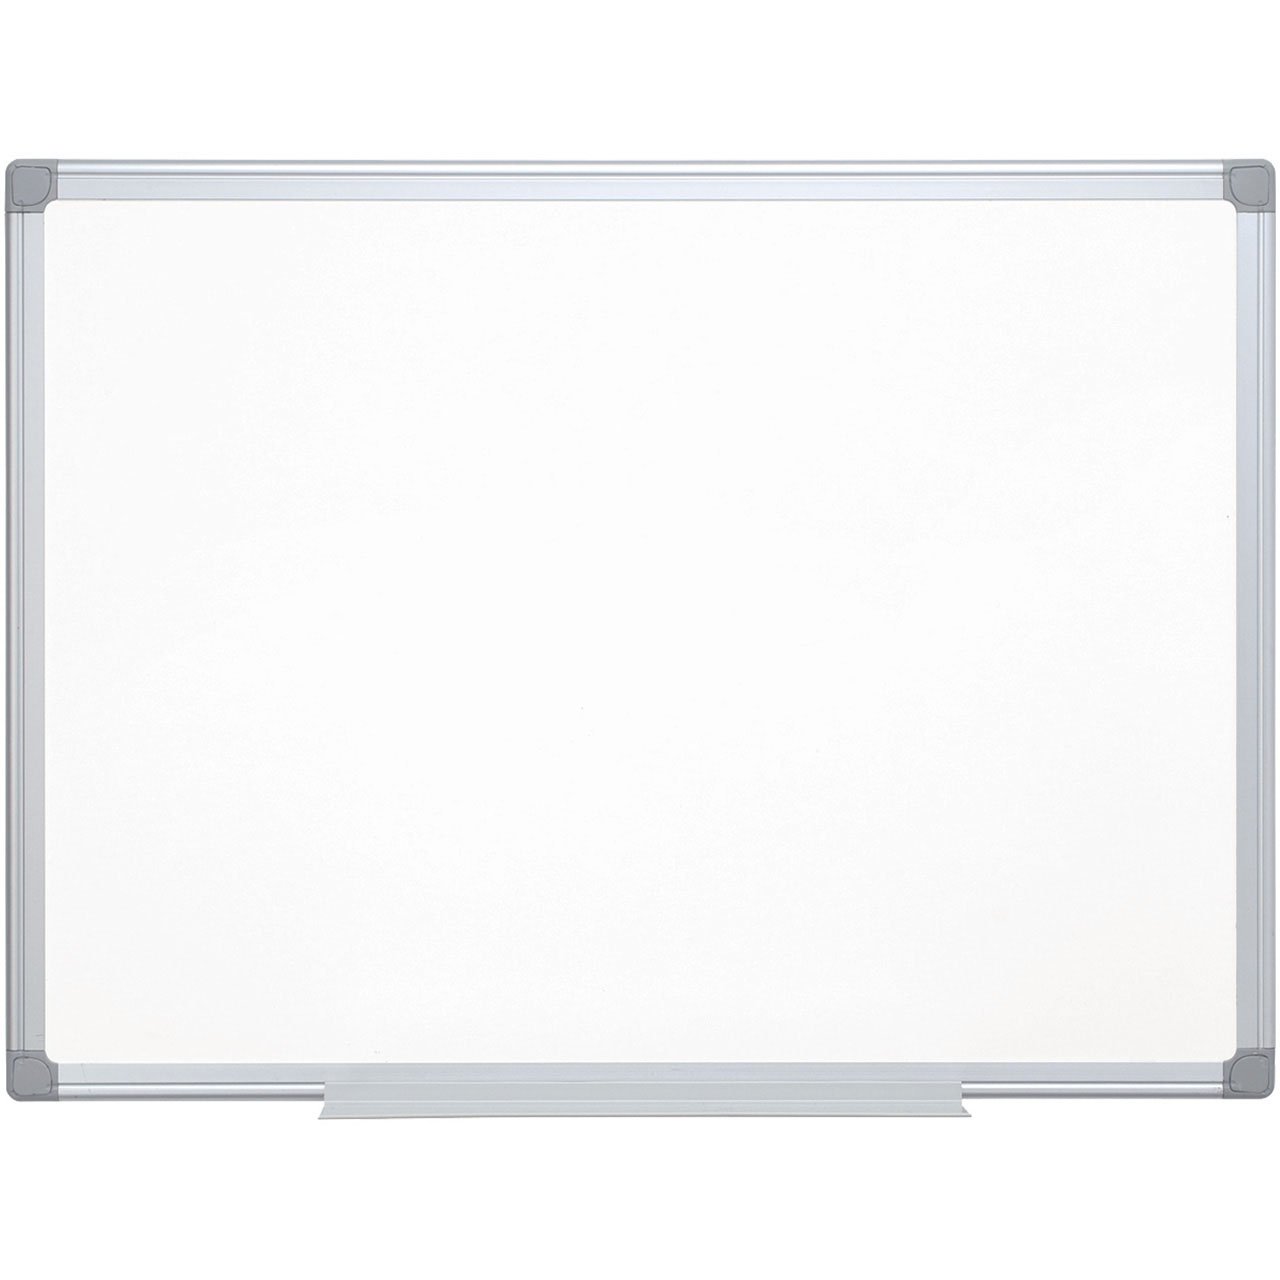 Q-connect lakeret whiteboardtavle 1200 mm x 1800 mm, Stål/Aluminium